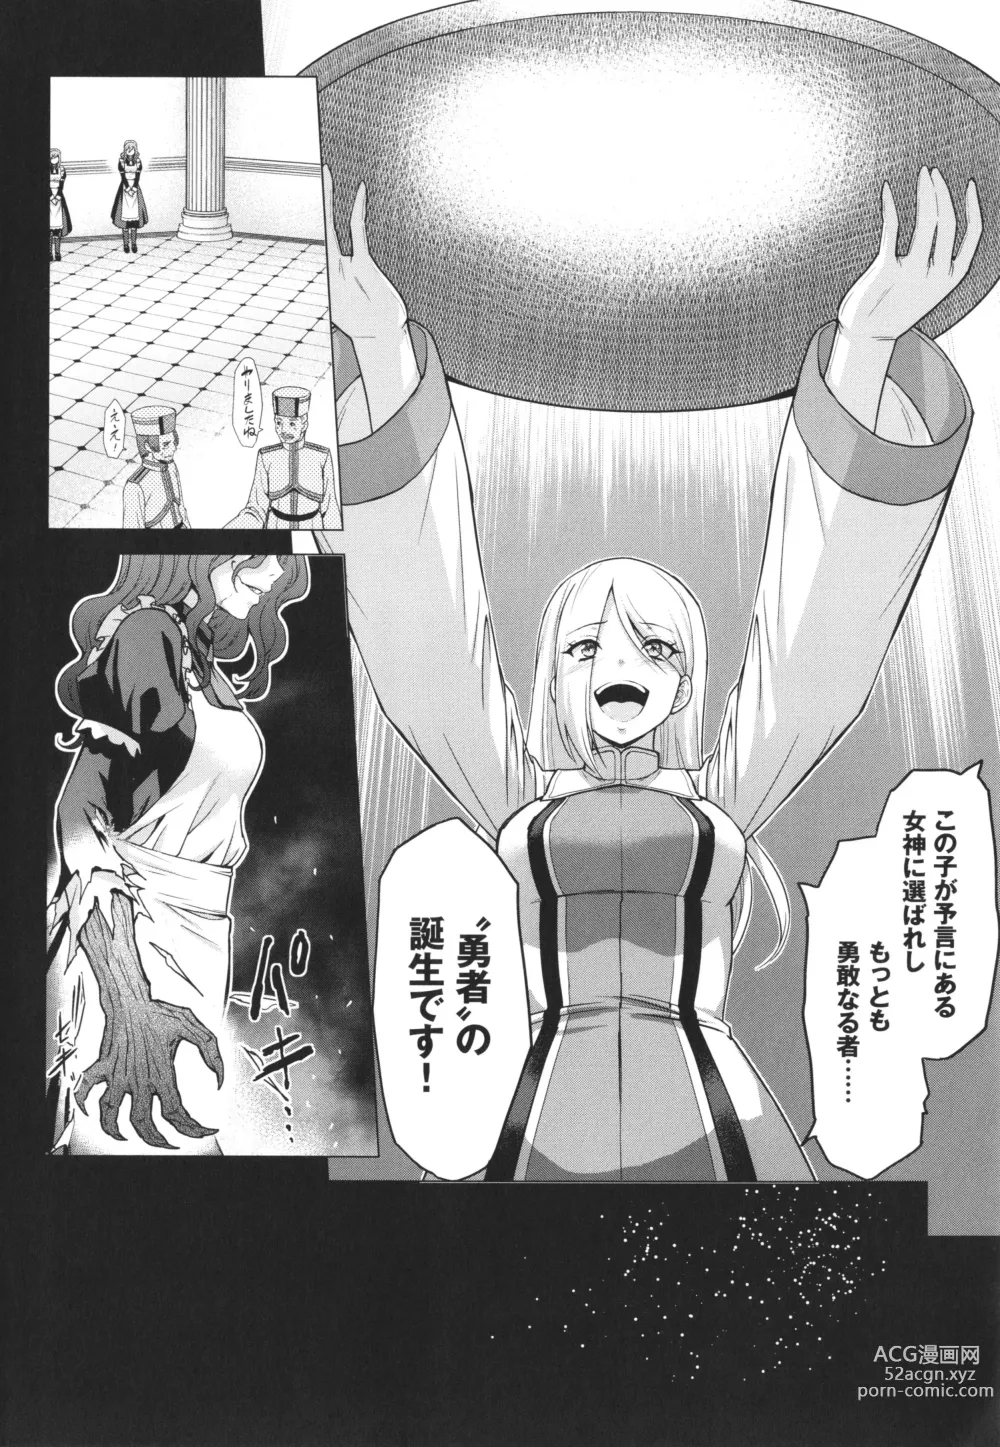 Page 5 of manga Seijo no Rakuin -Annunciation of despair-